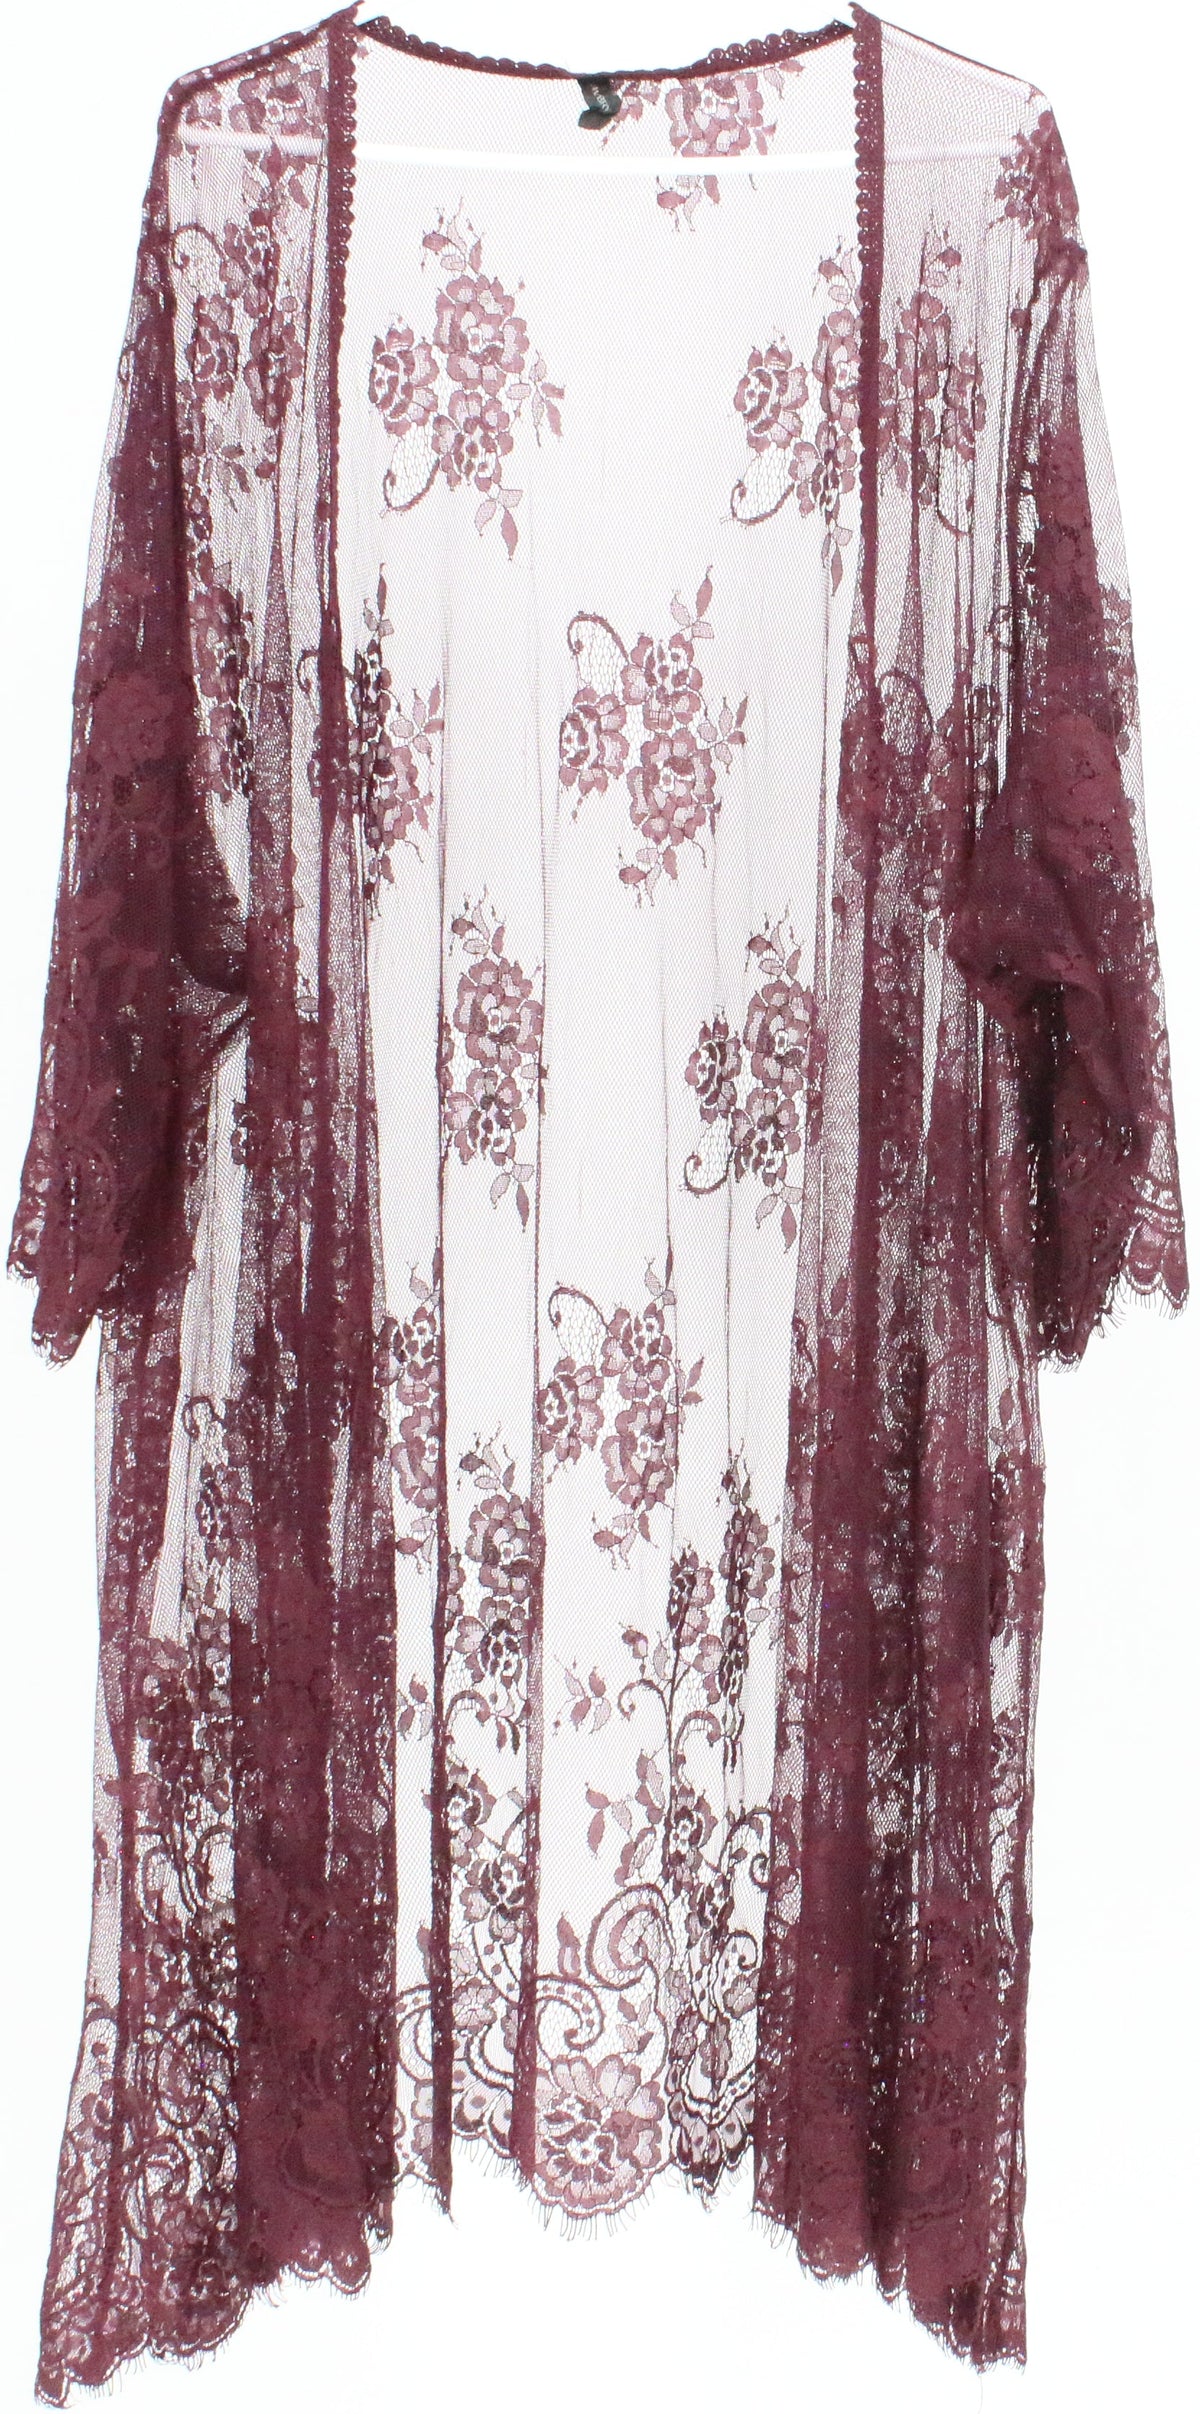 Lane Bryant Burgundy Lace Robe